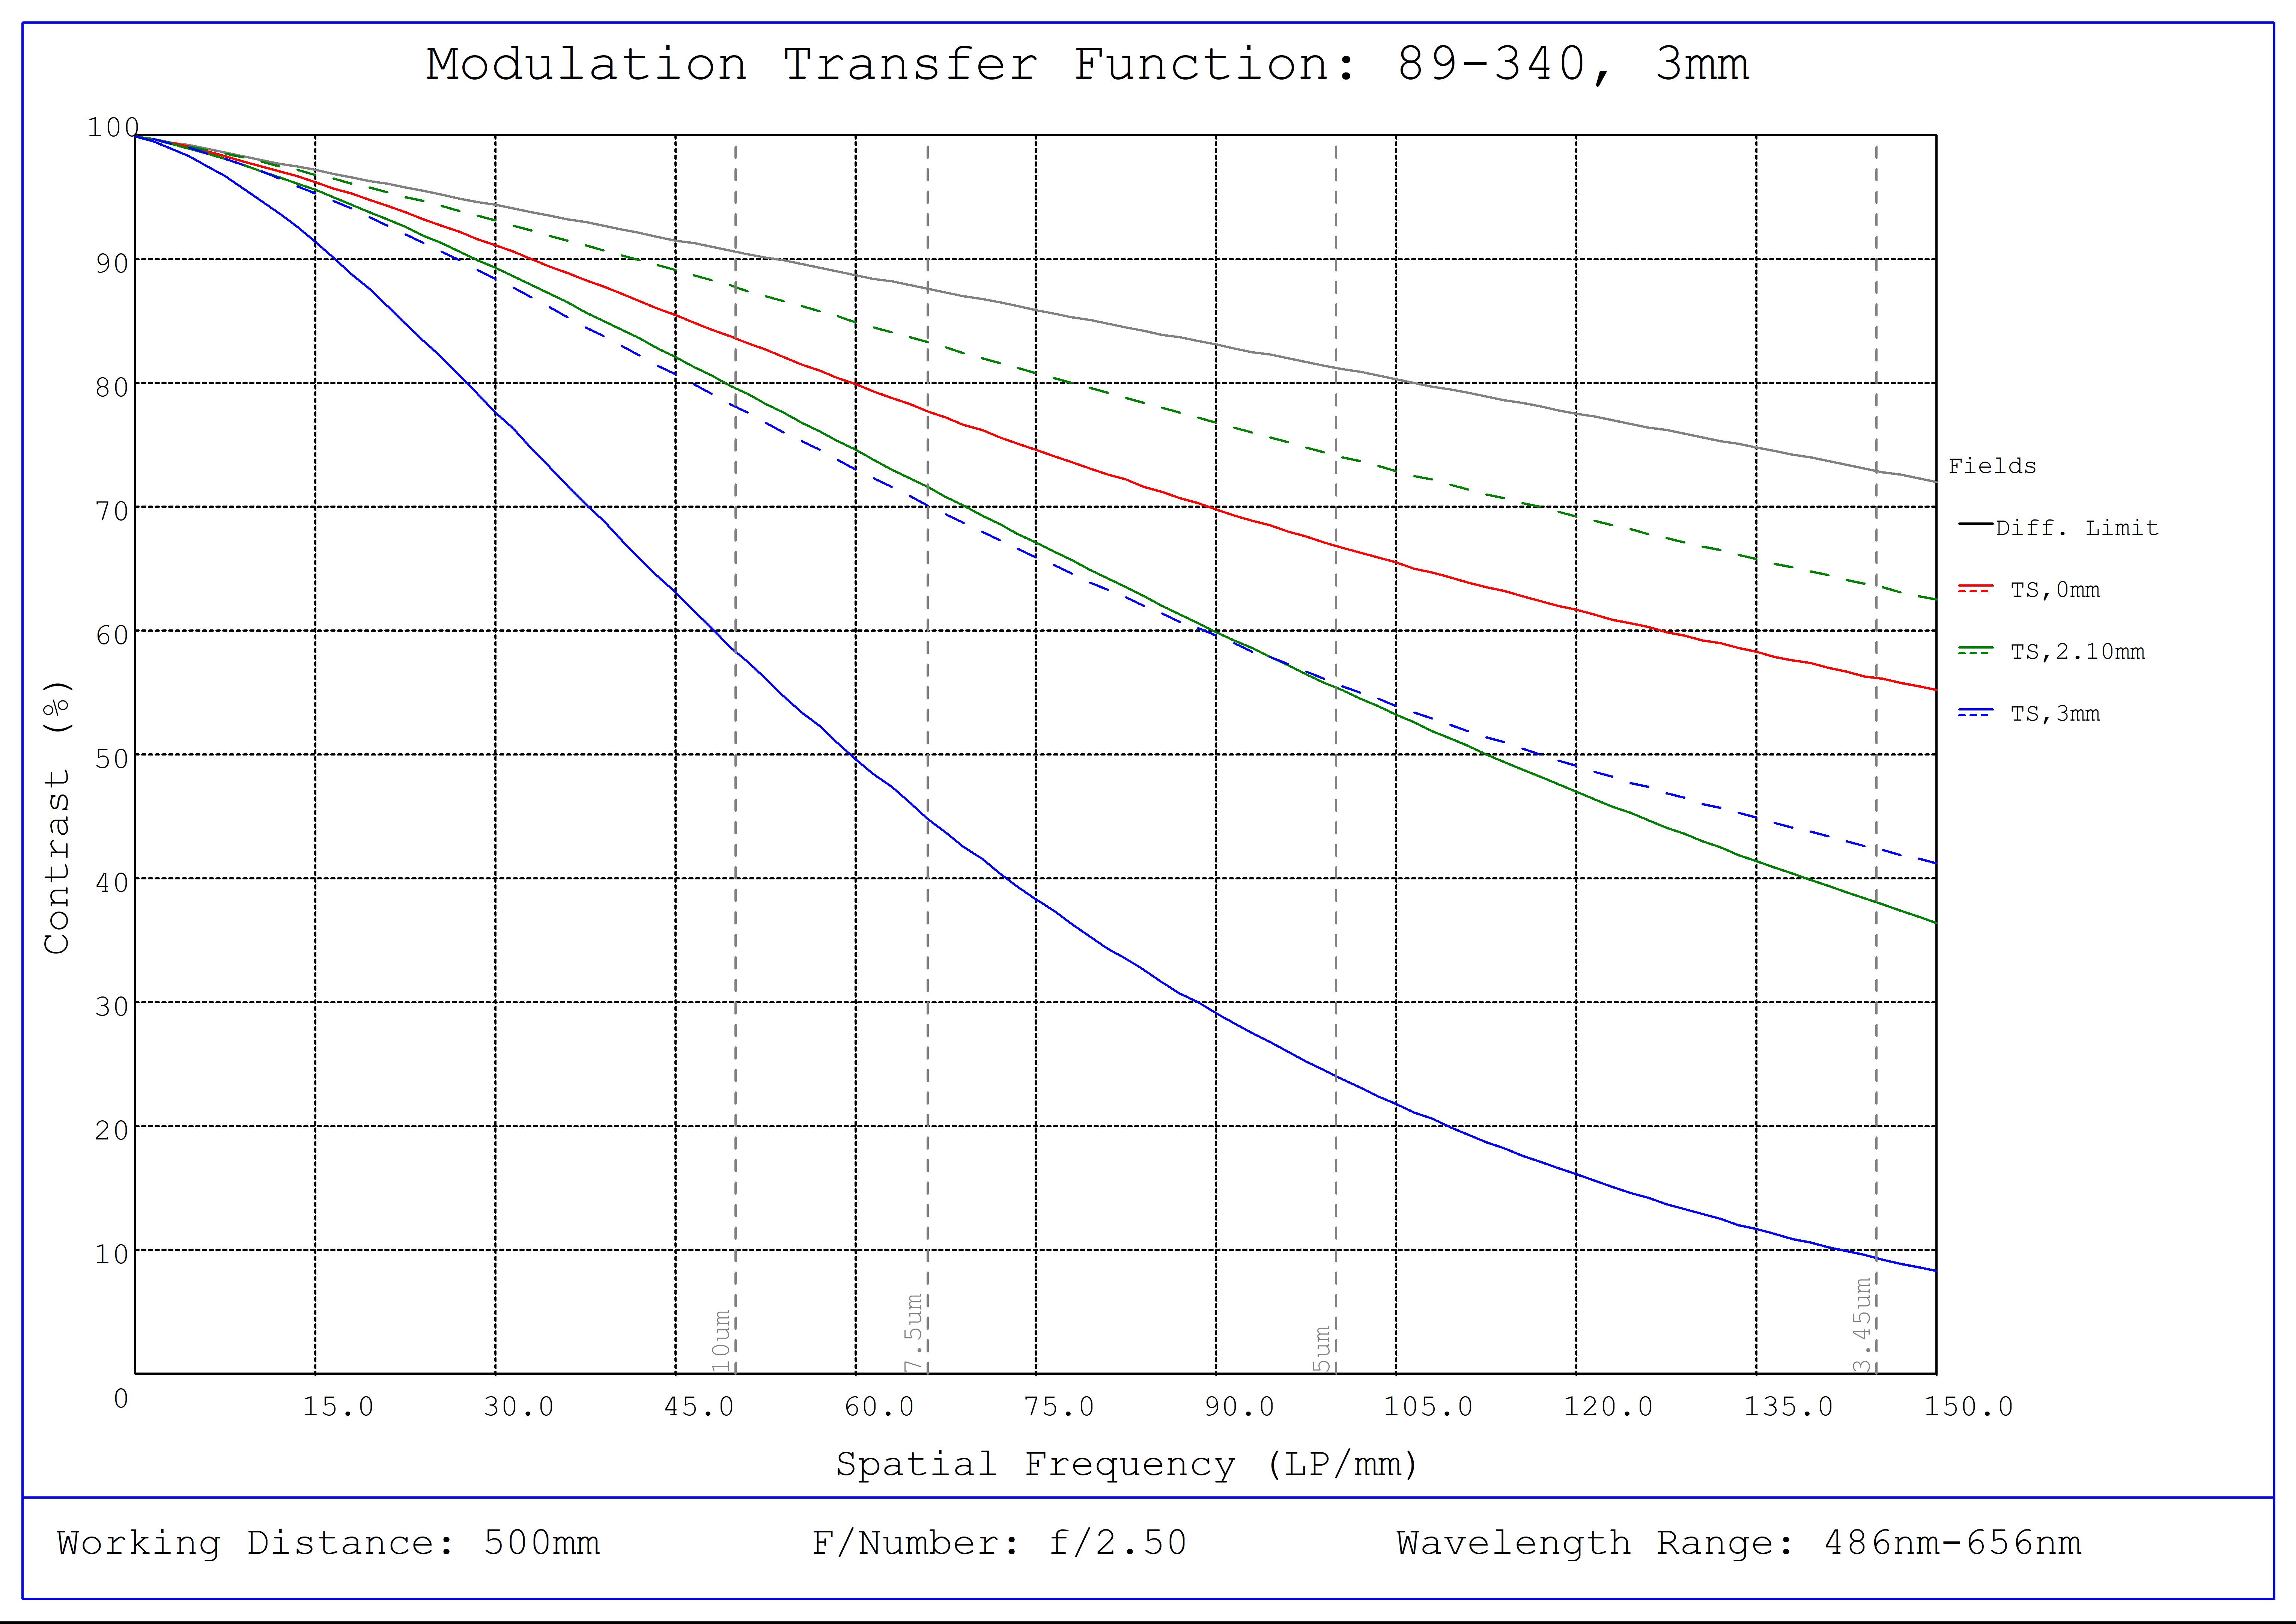 #20-055, 3mm FL f/2.5, IR-Cut Blue Series M12 Lens, Modulated Transfer Function (MTF) Plot, 500mm Working Distance, f2.5